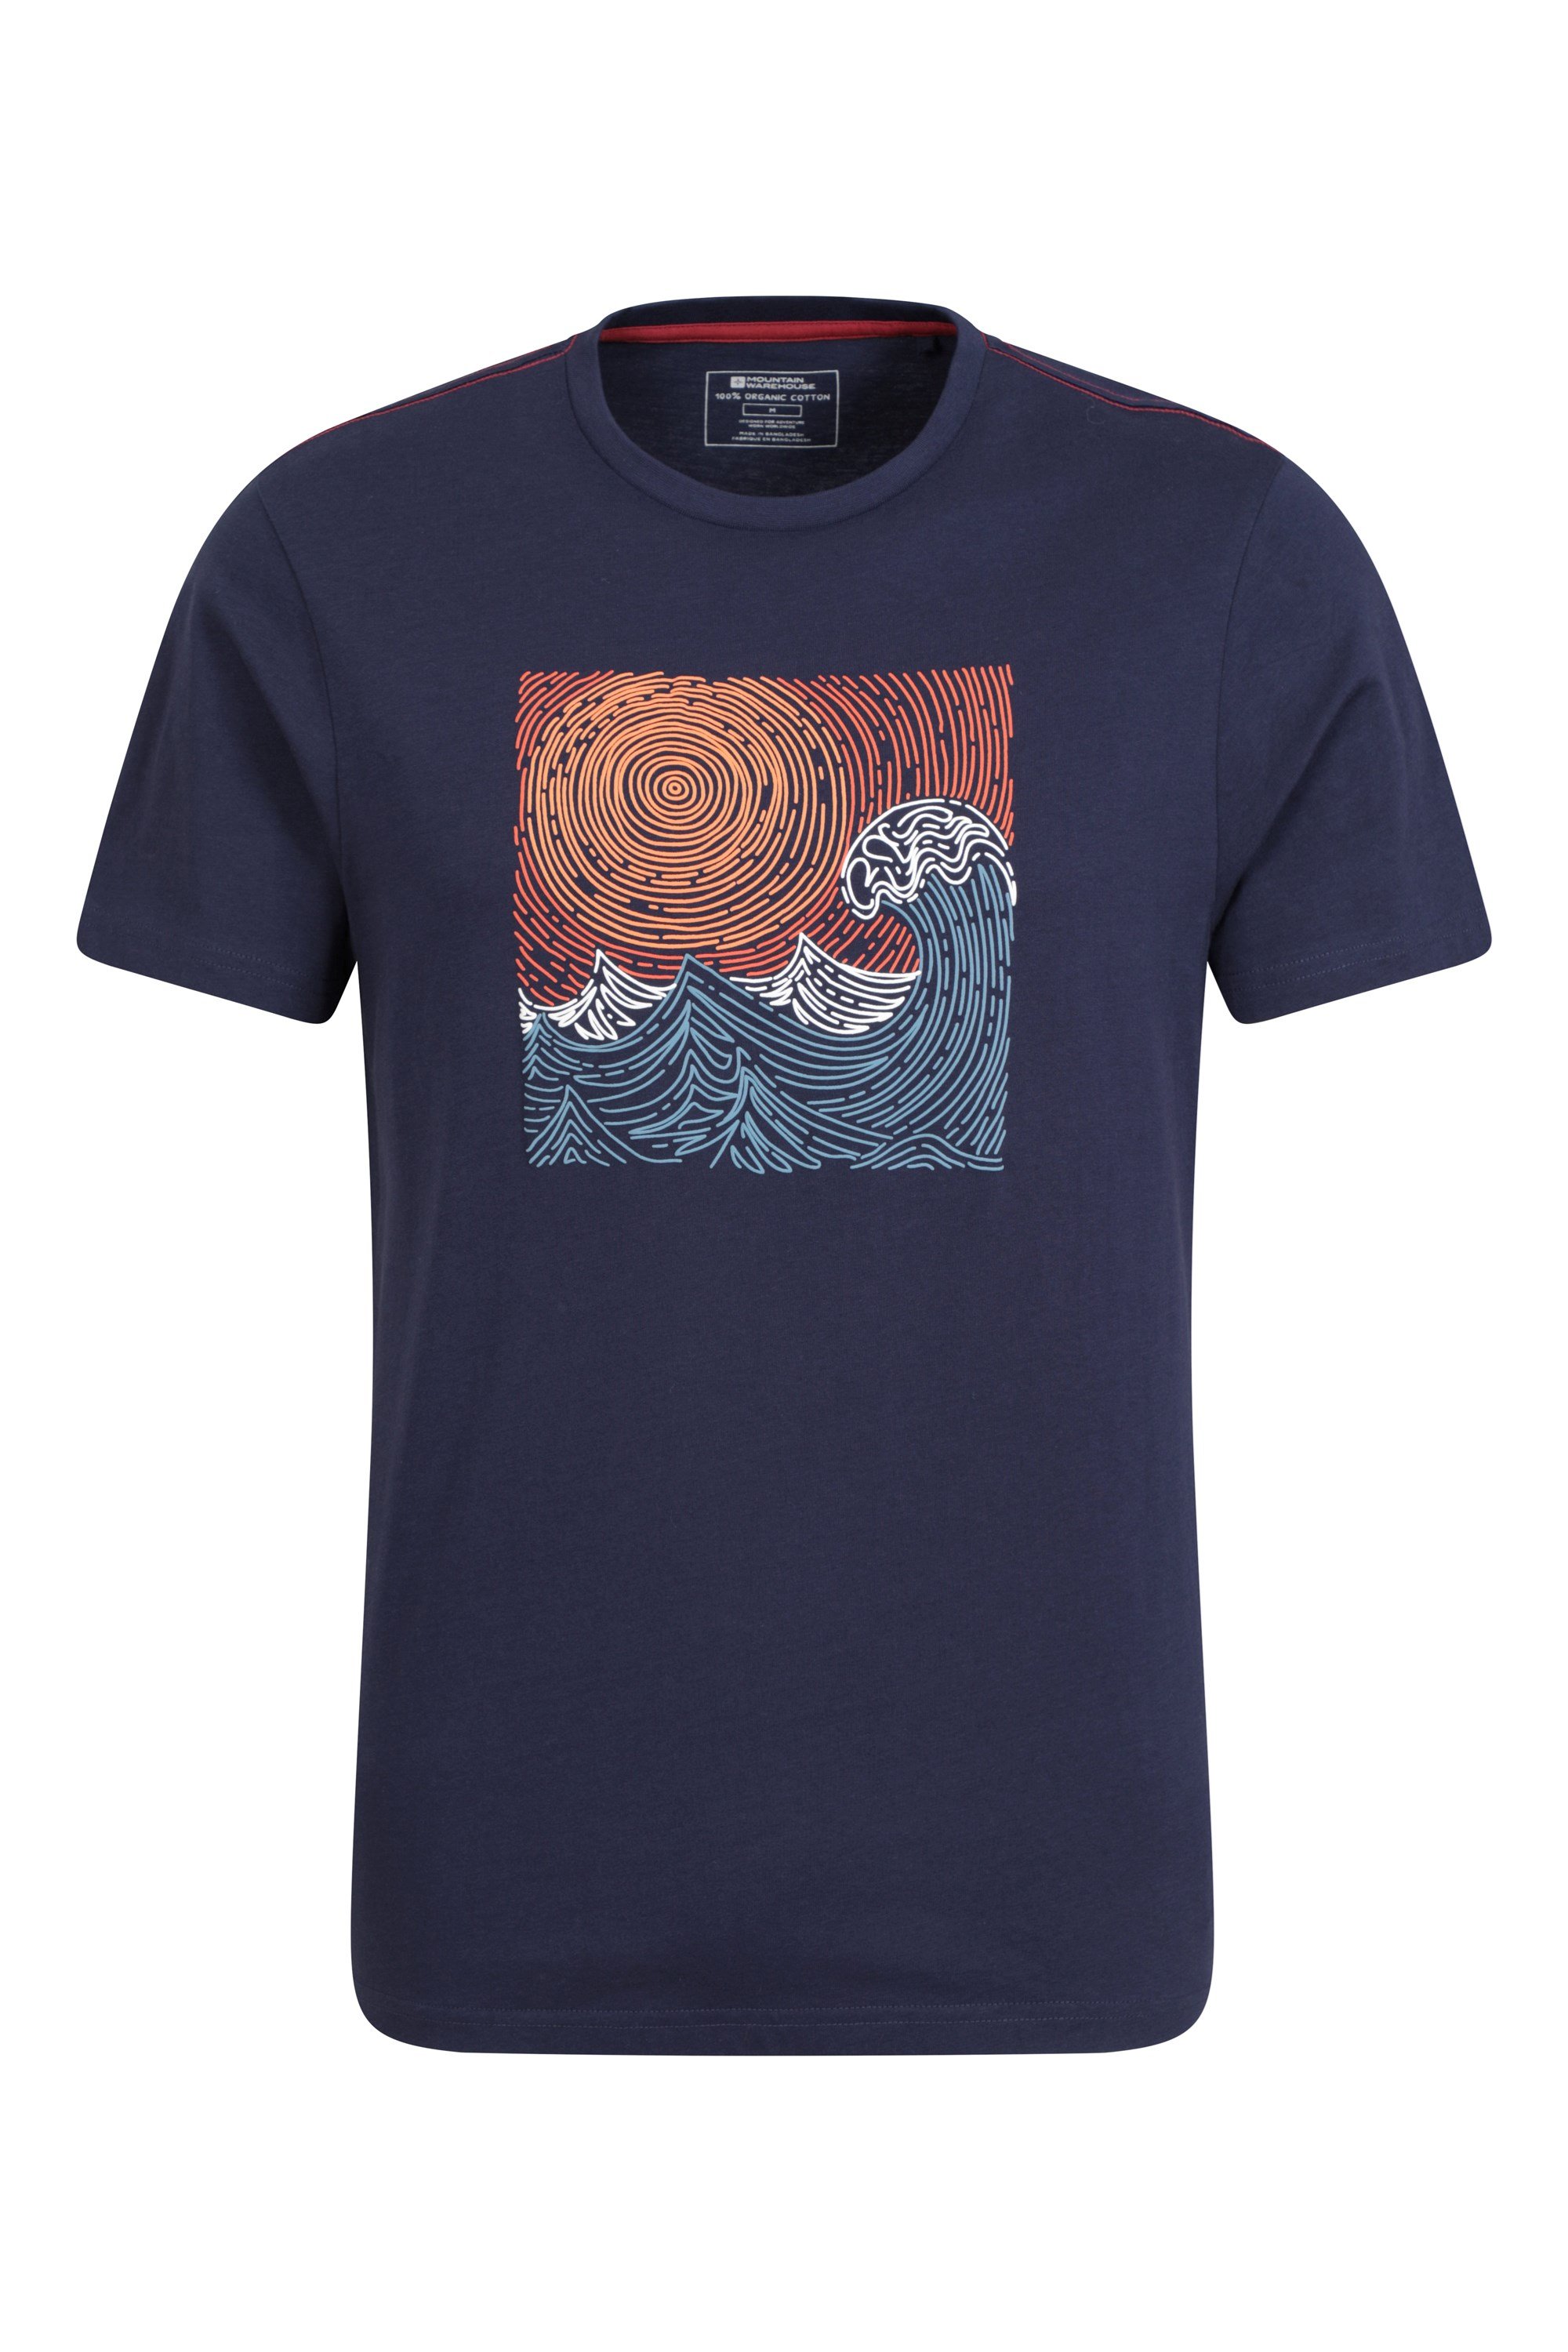 Tidal Wave Mens Organic T-shirt - Navy